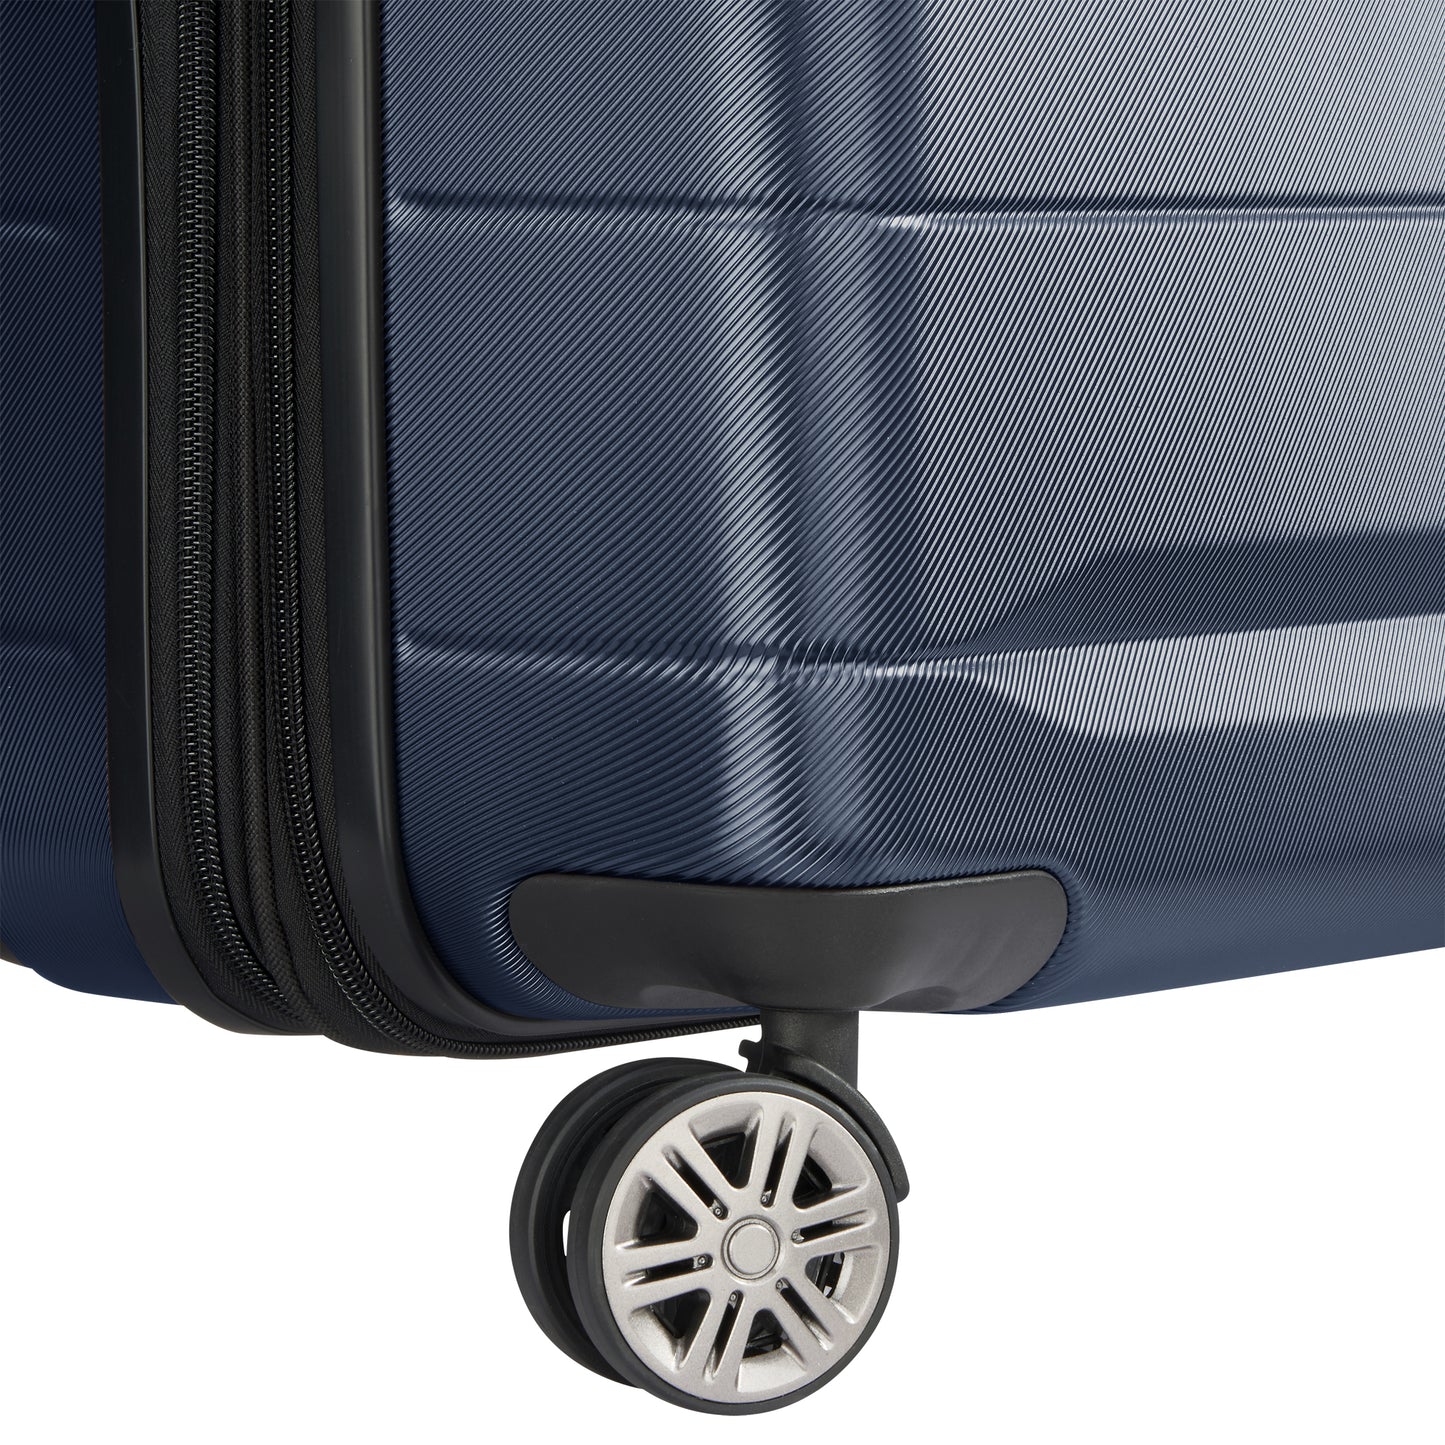 Delsey Comete 2.0 Hardcase Luggage (MEDIUM)